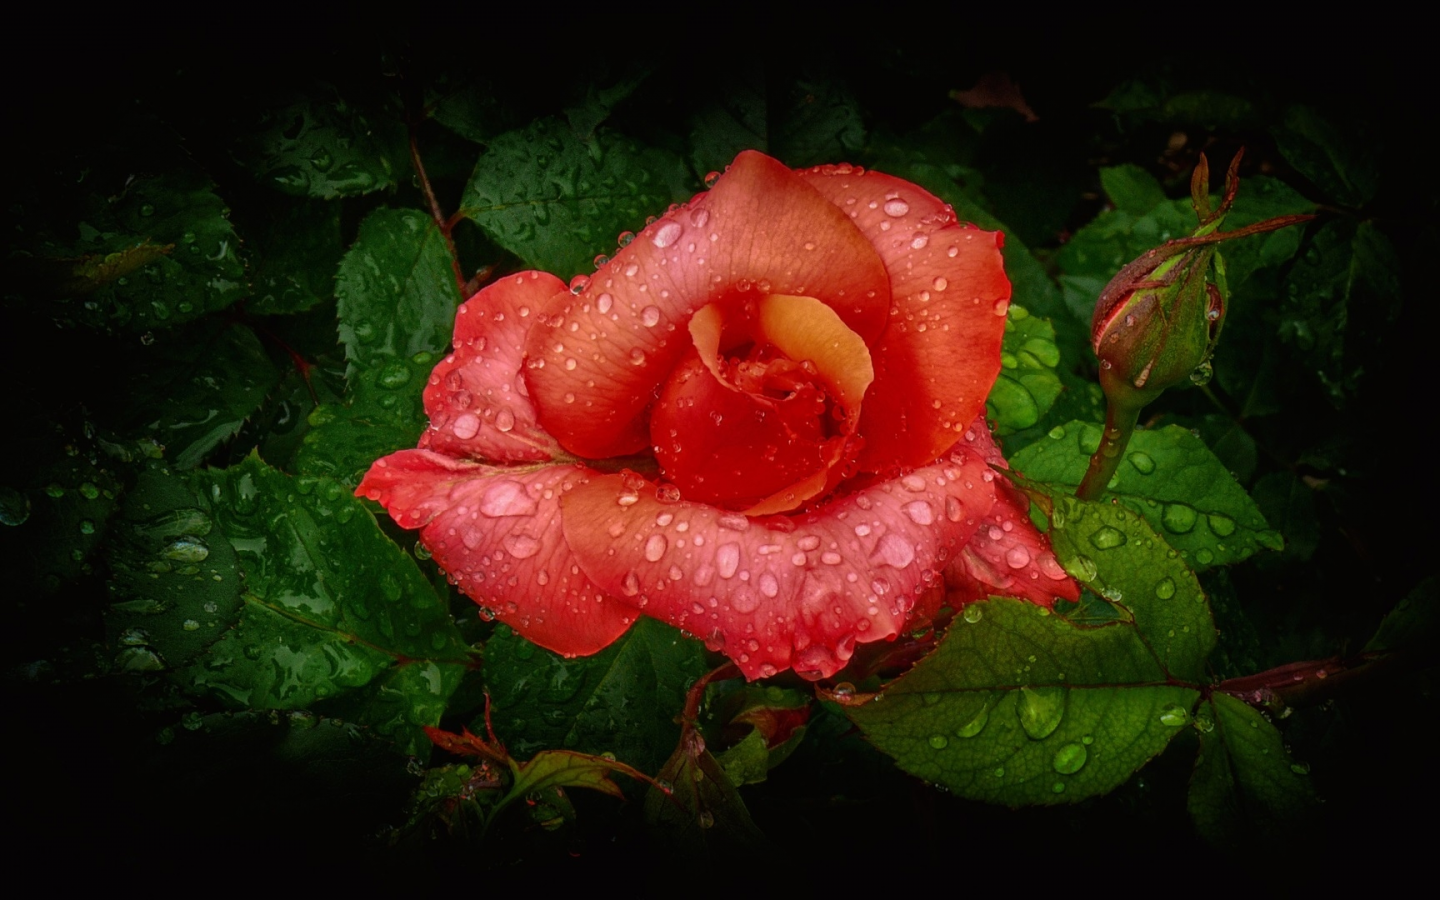 flower, rose, petals